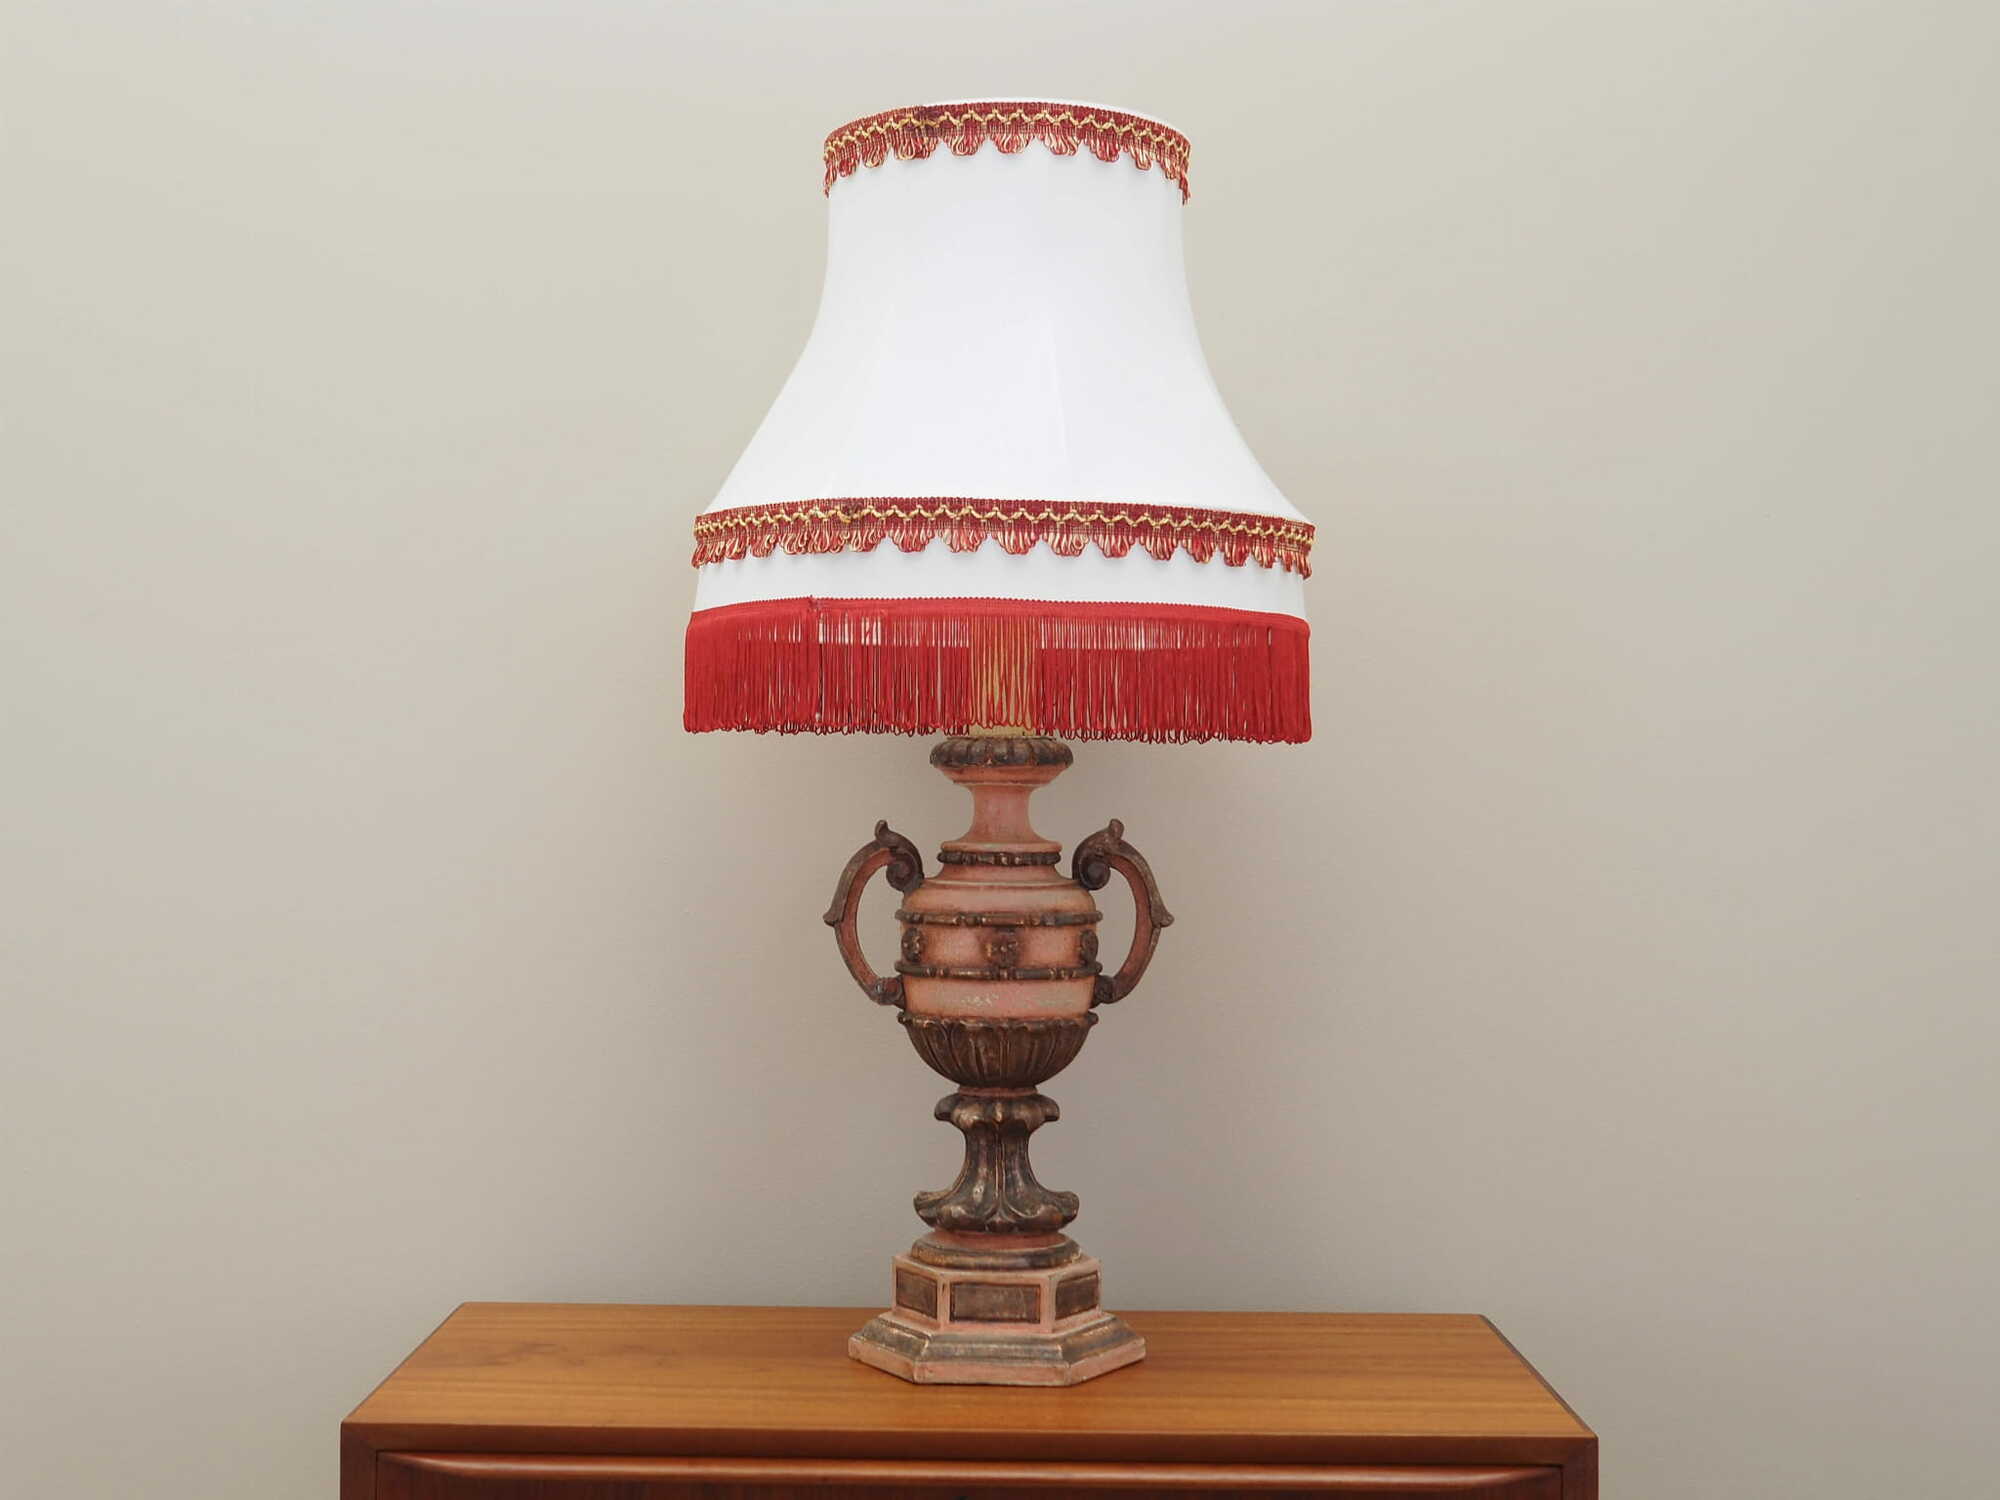 Vintage Tischlampe Keramik Textil Mehrfarbig 1970er Jahre 1